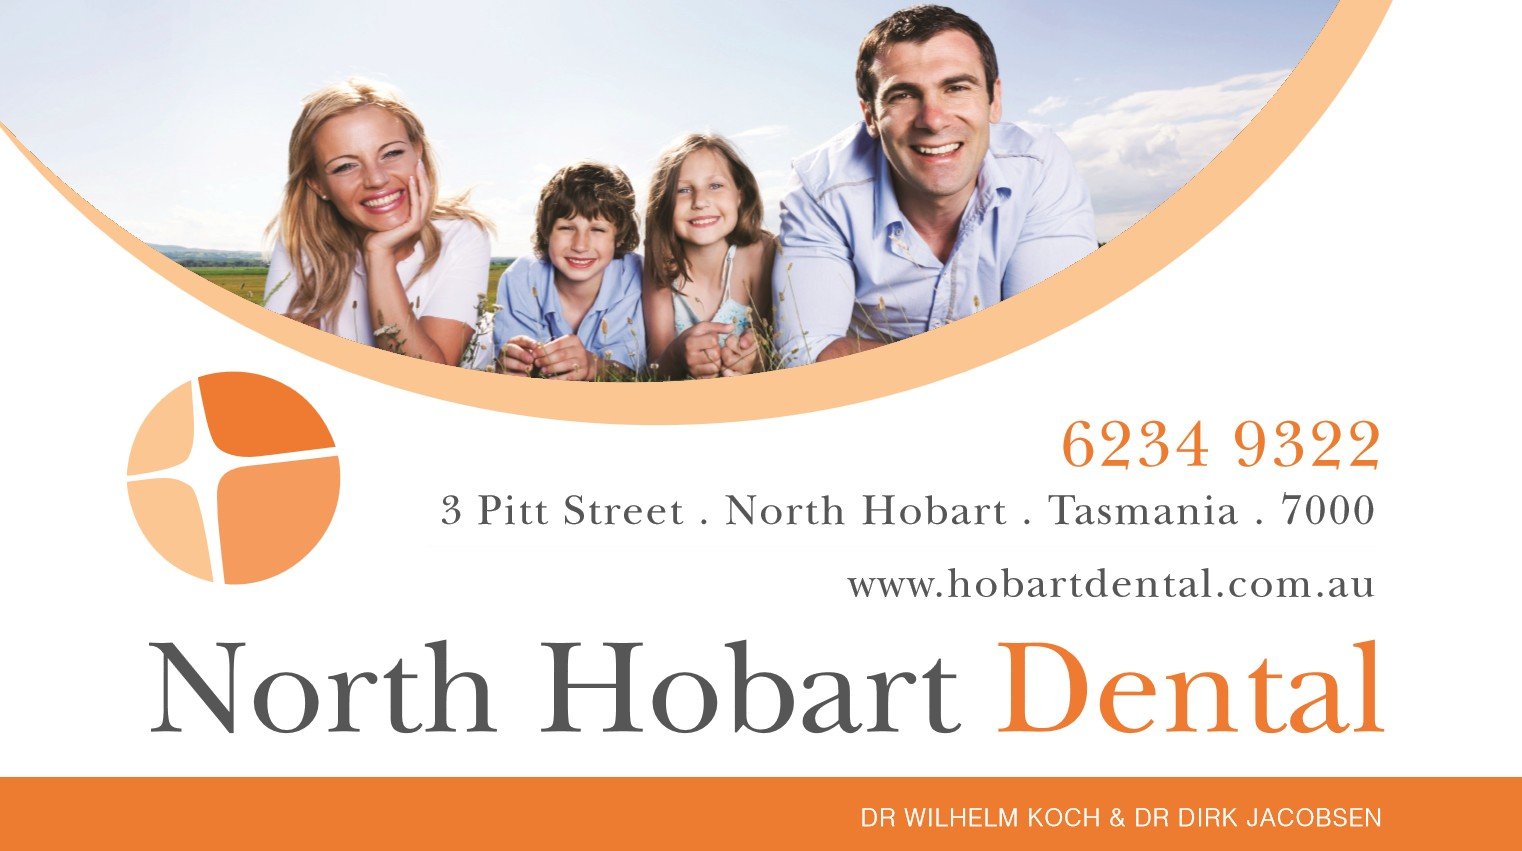 North Hobart Dental - Gold Coast Dentists 0